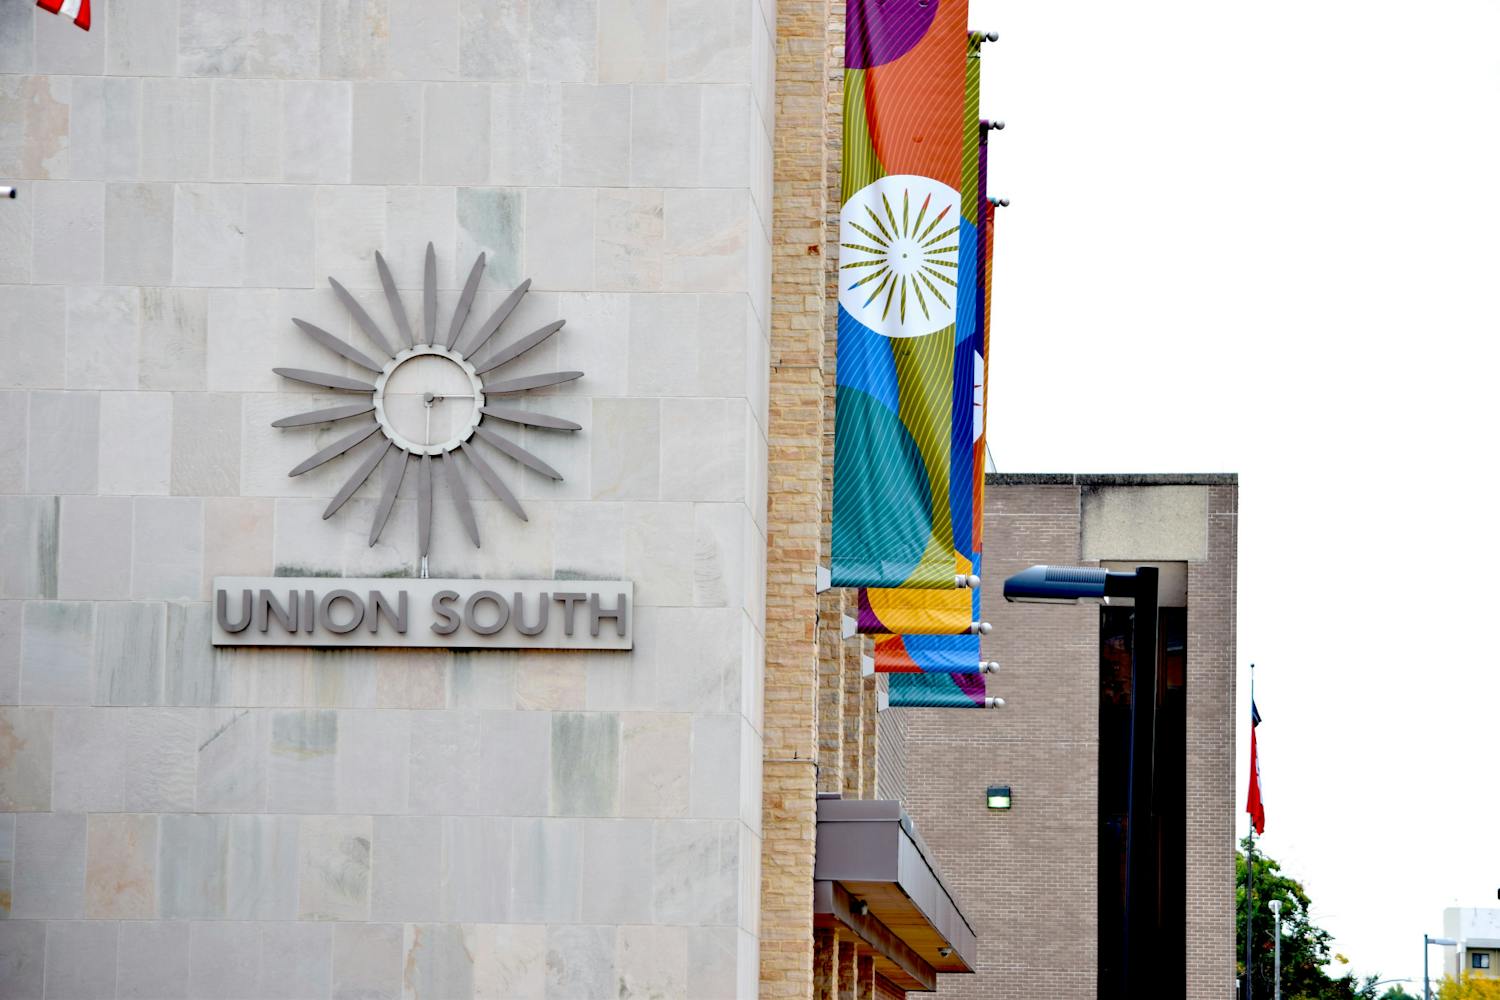 Union South